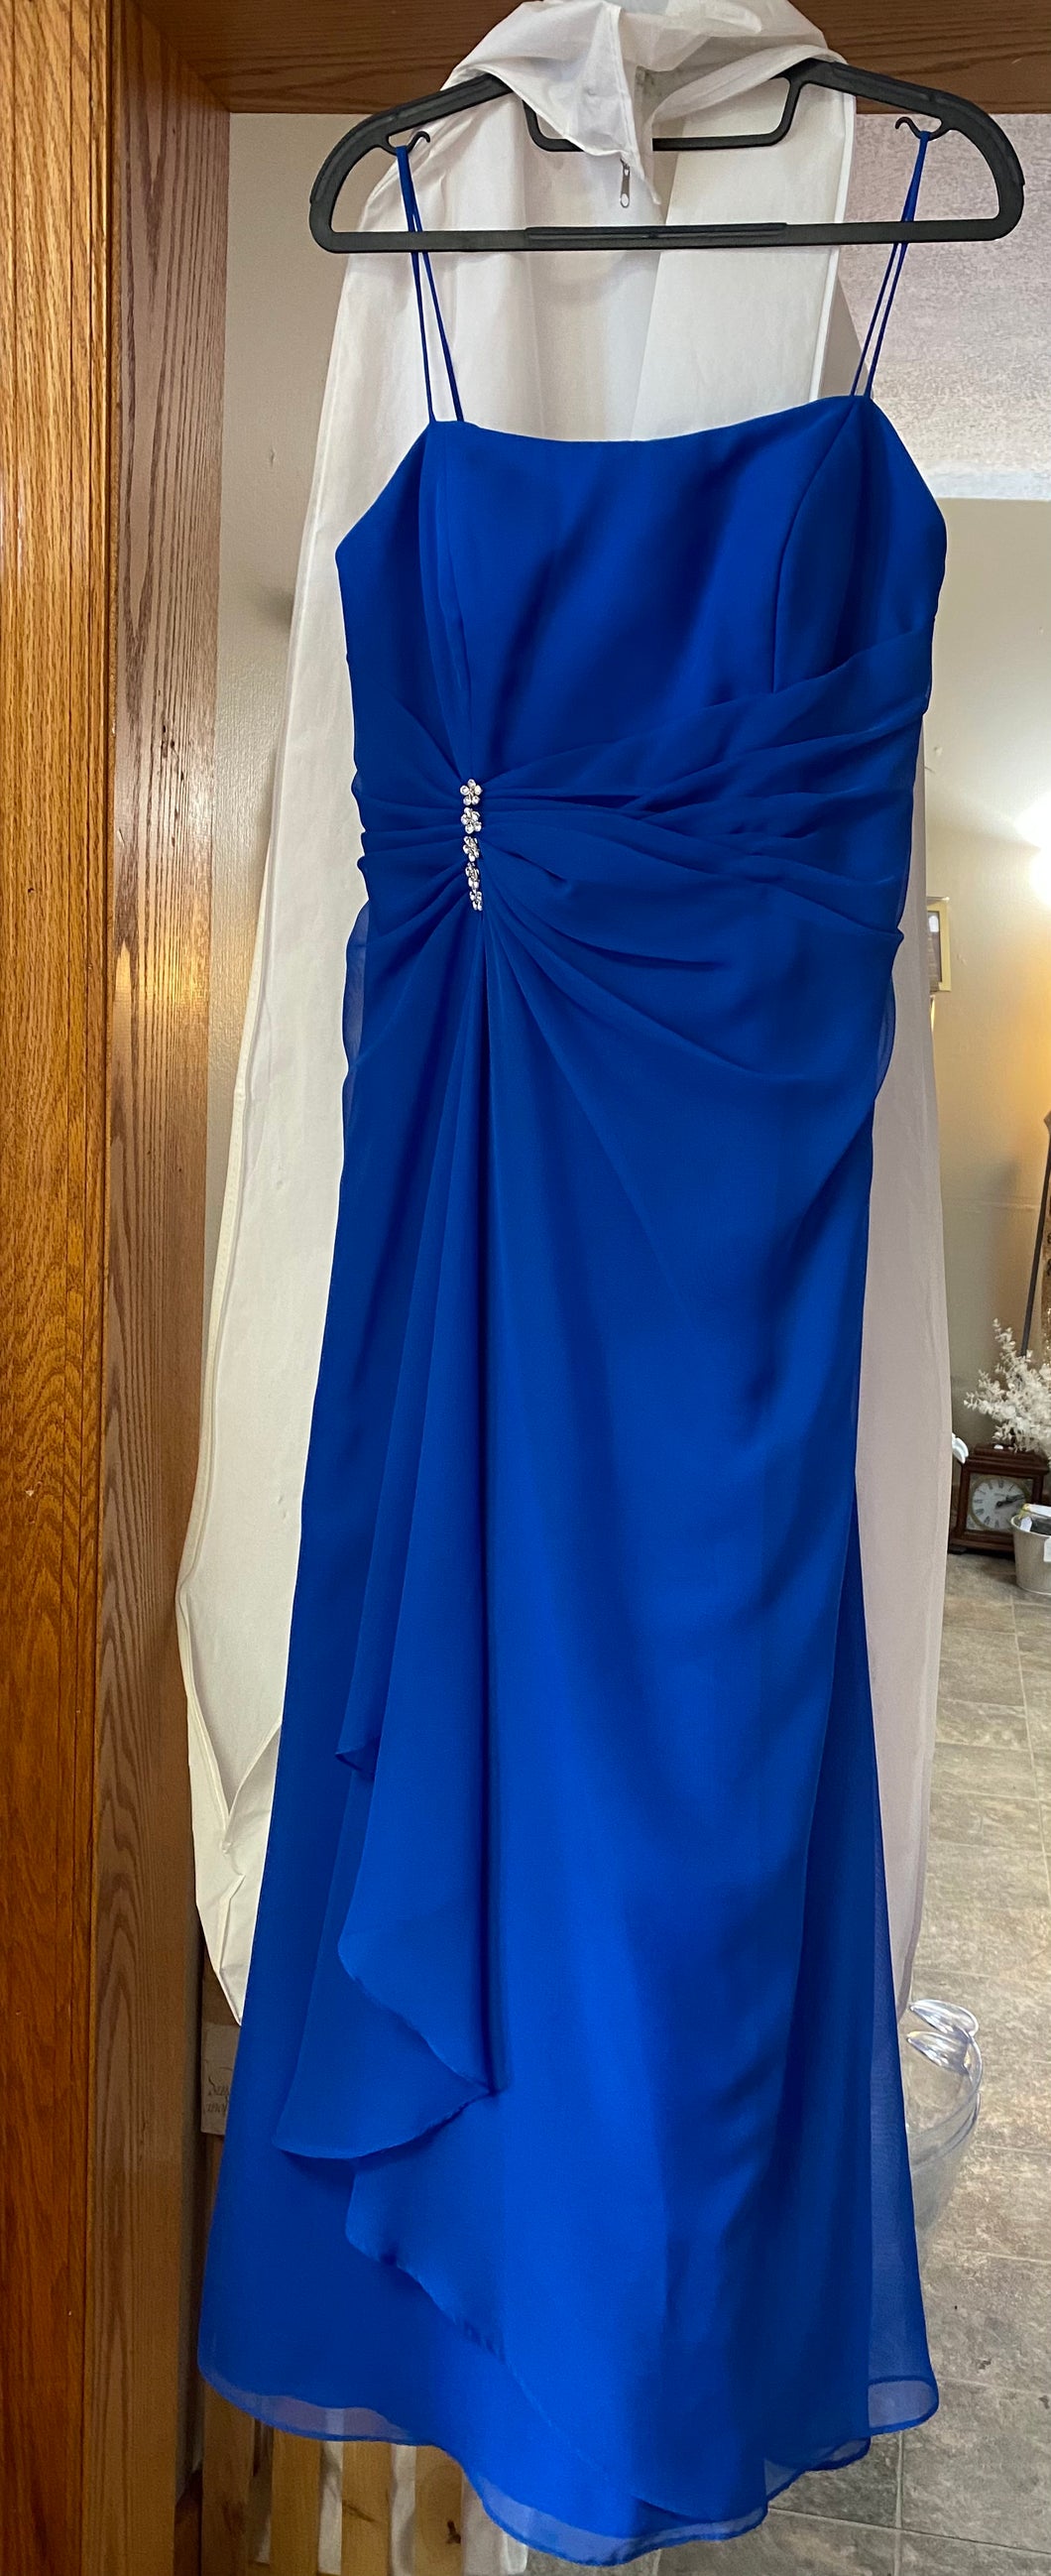 LYNC400-BA Royal Blue Gown